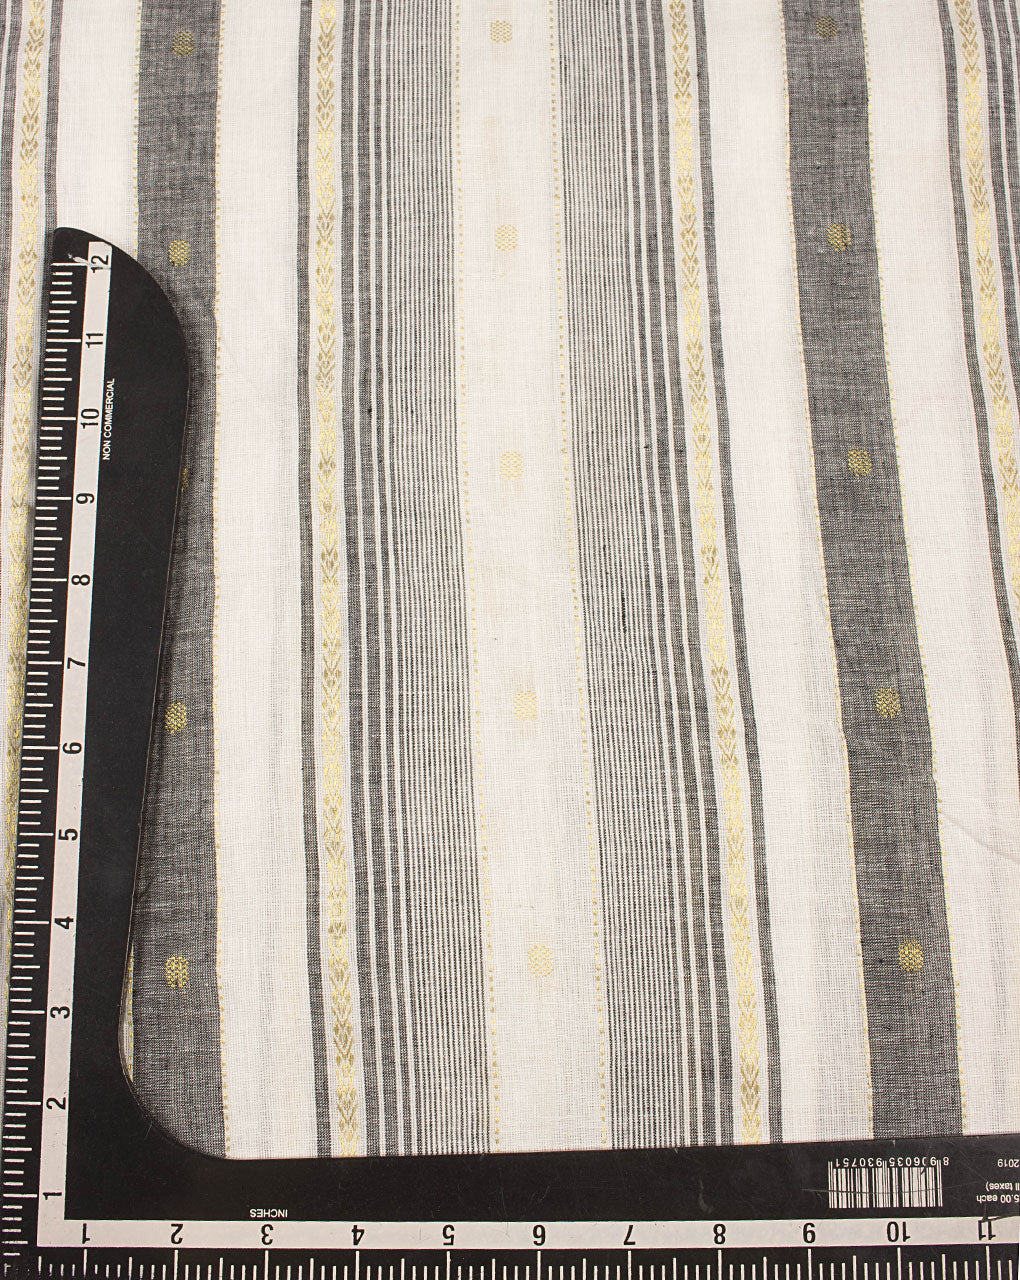 Zari Jacquard Loom Textured Cotton Fabric - Fabriclore.com